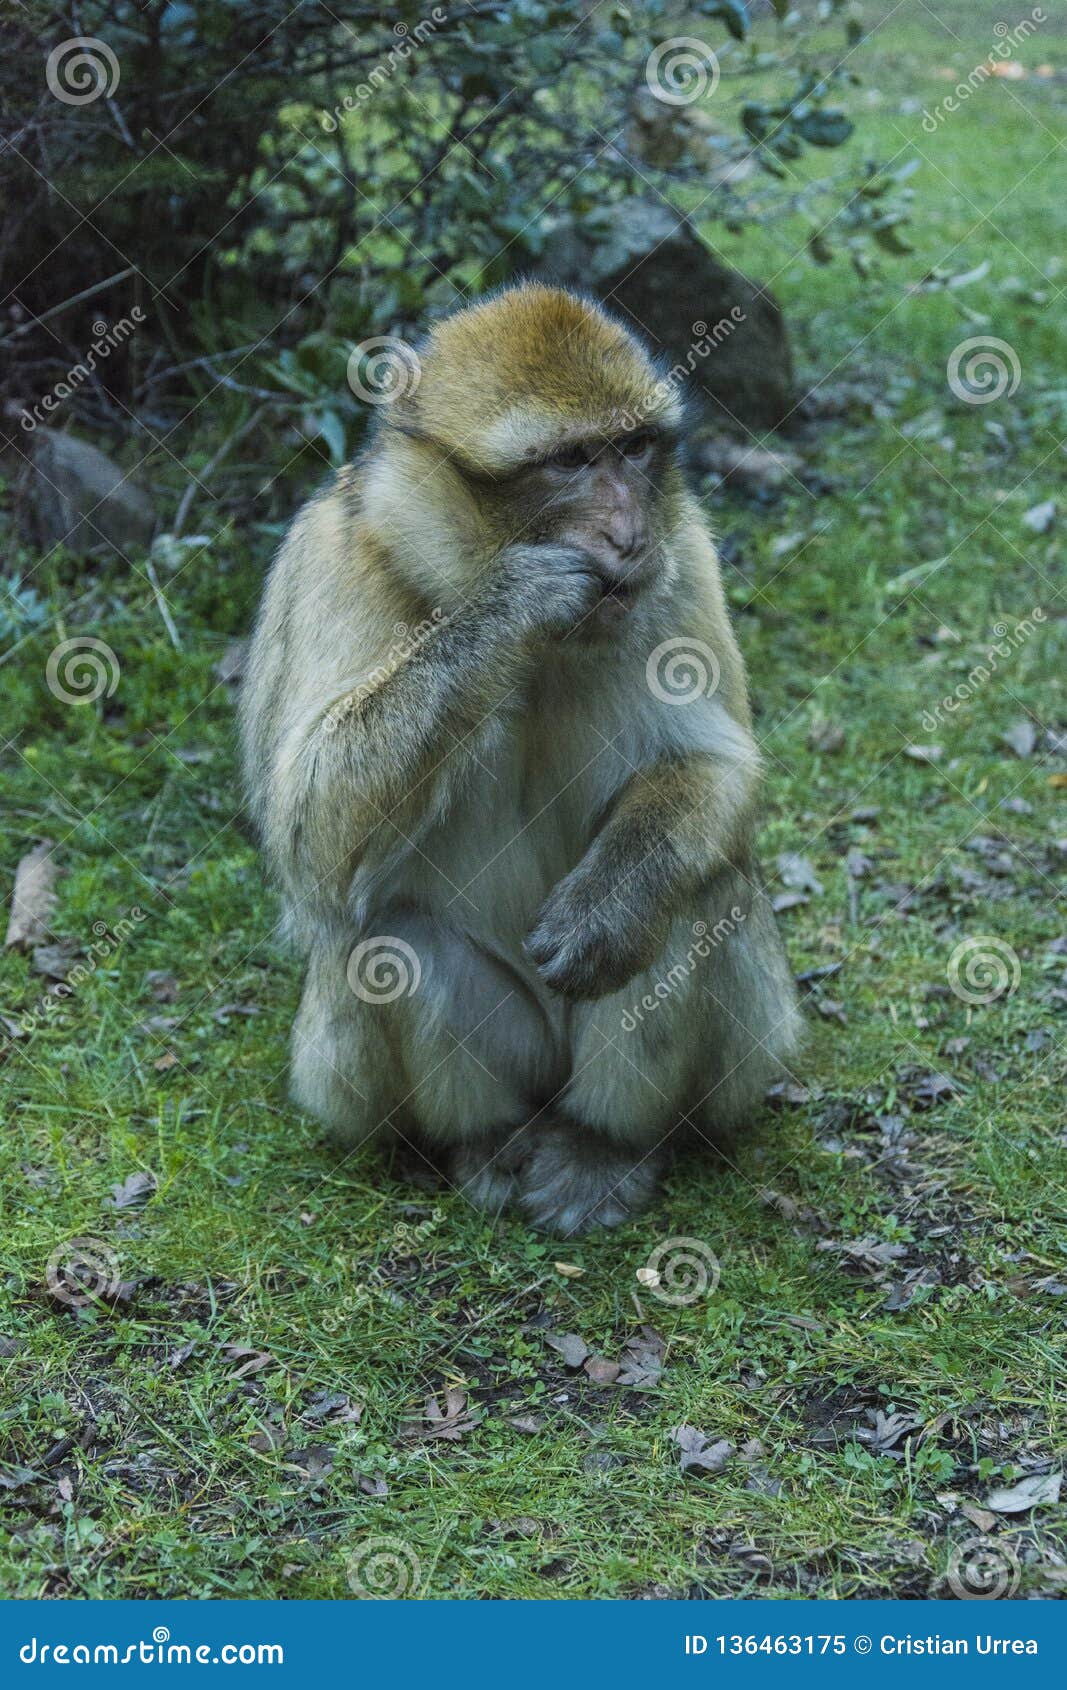 monkey in morocco